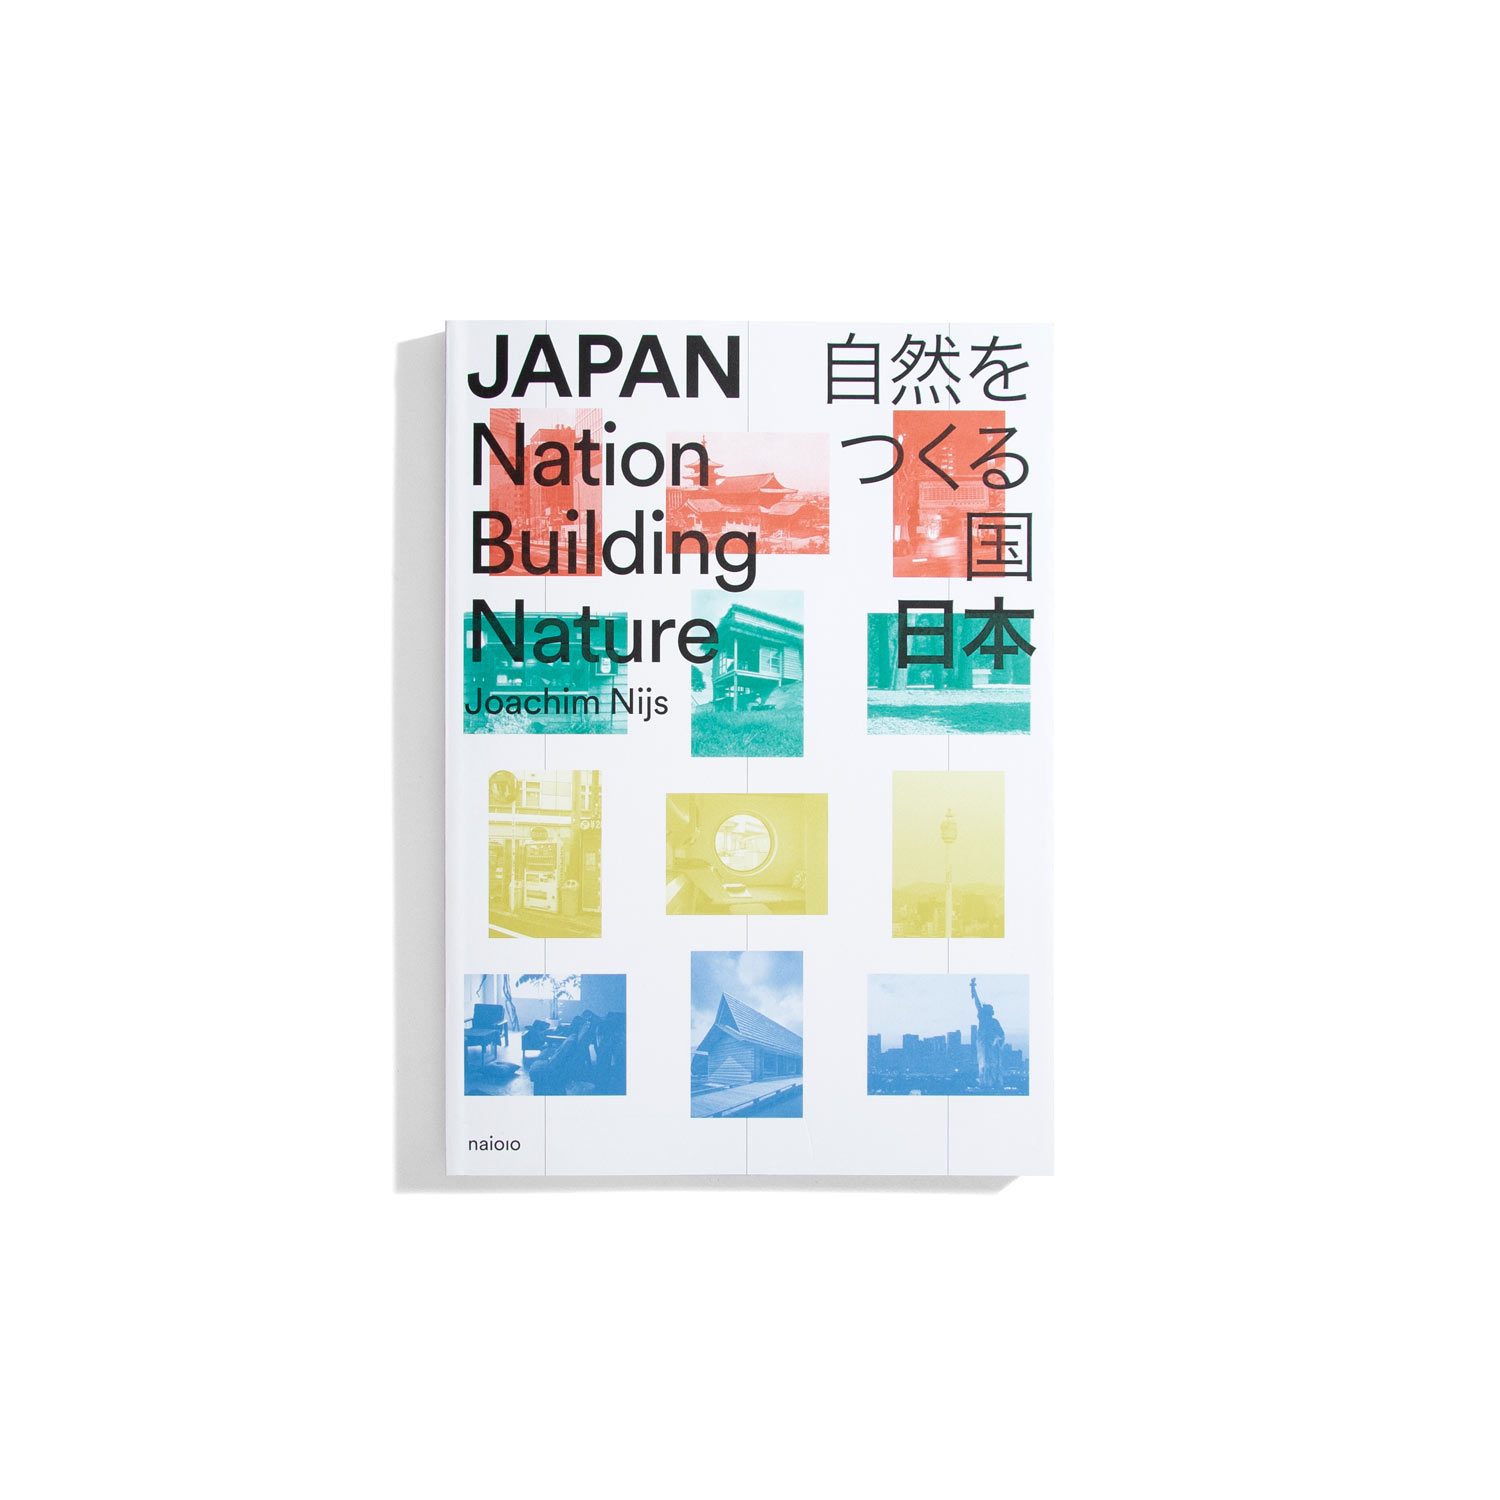 Japan - Nation Building Nature